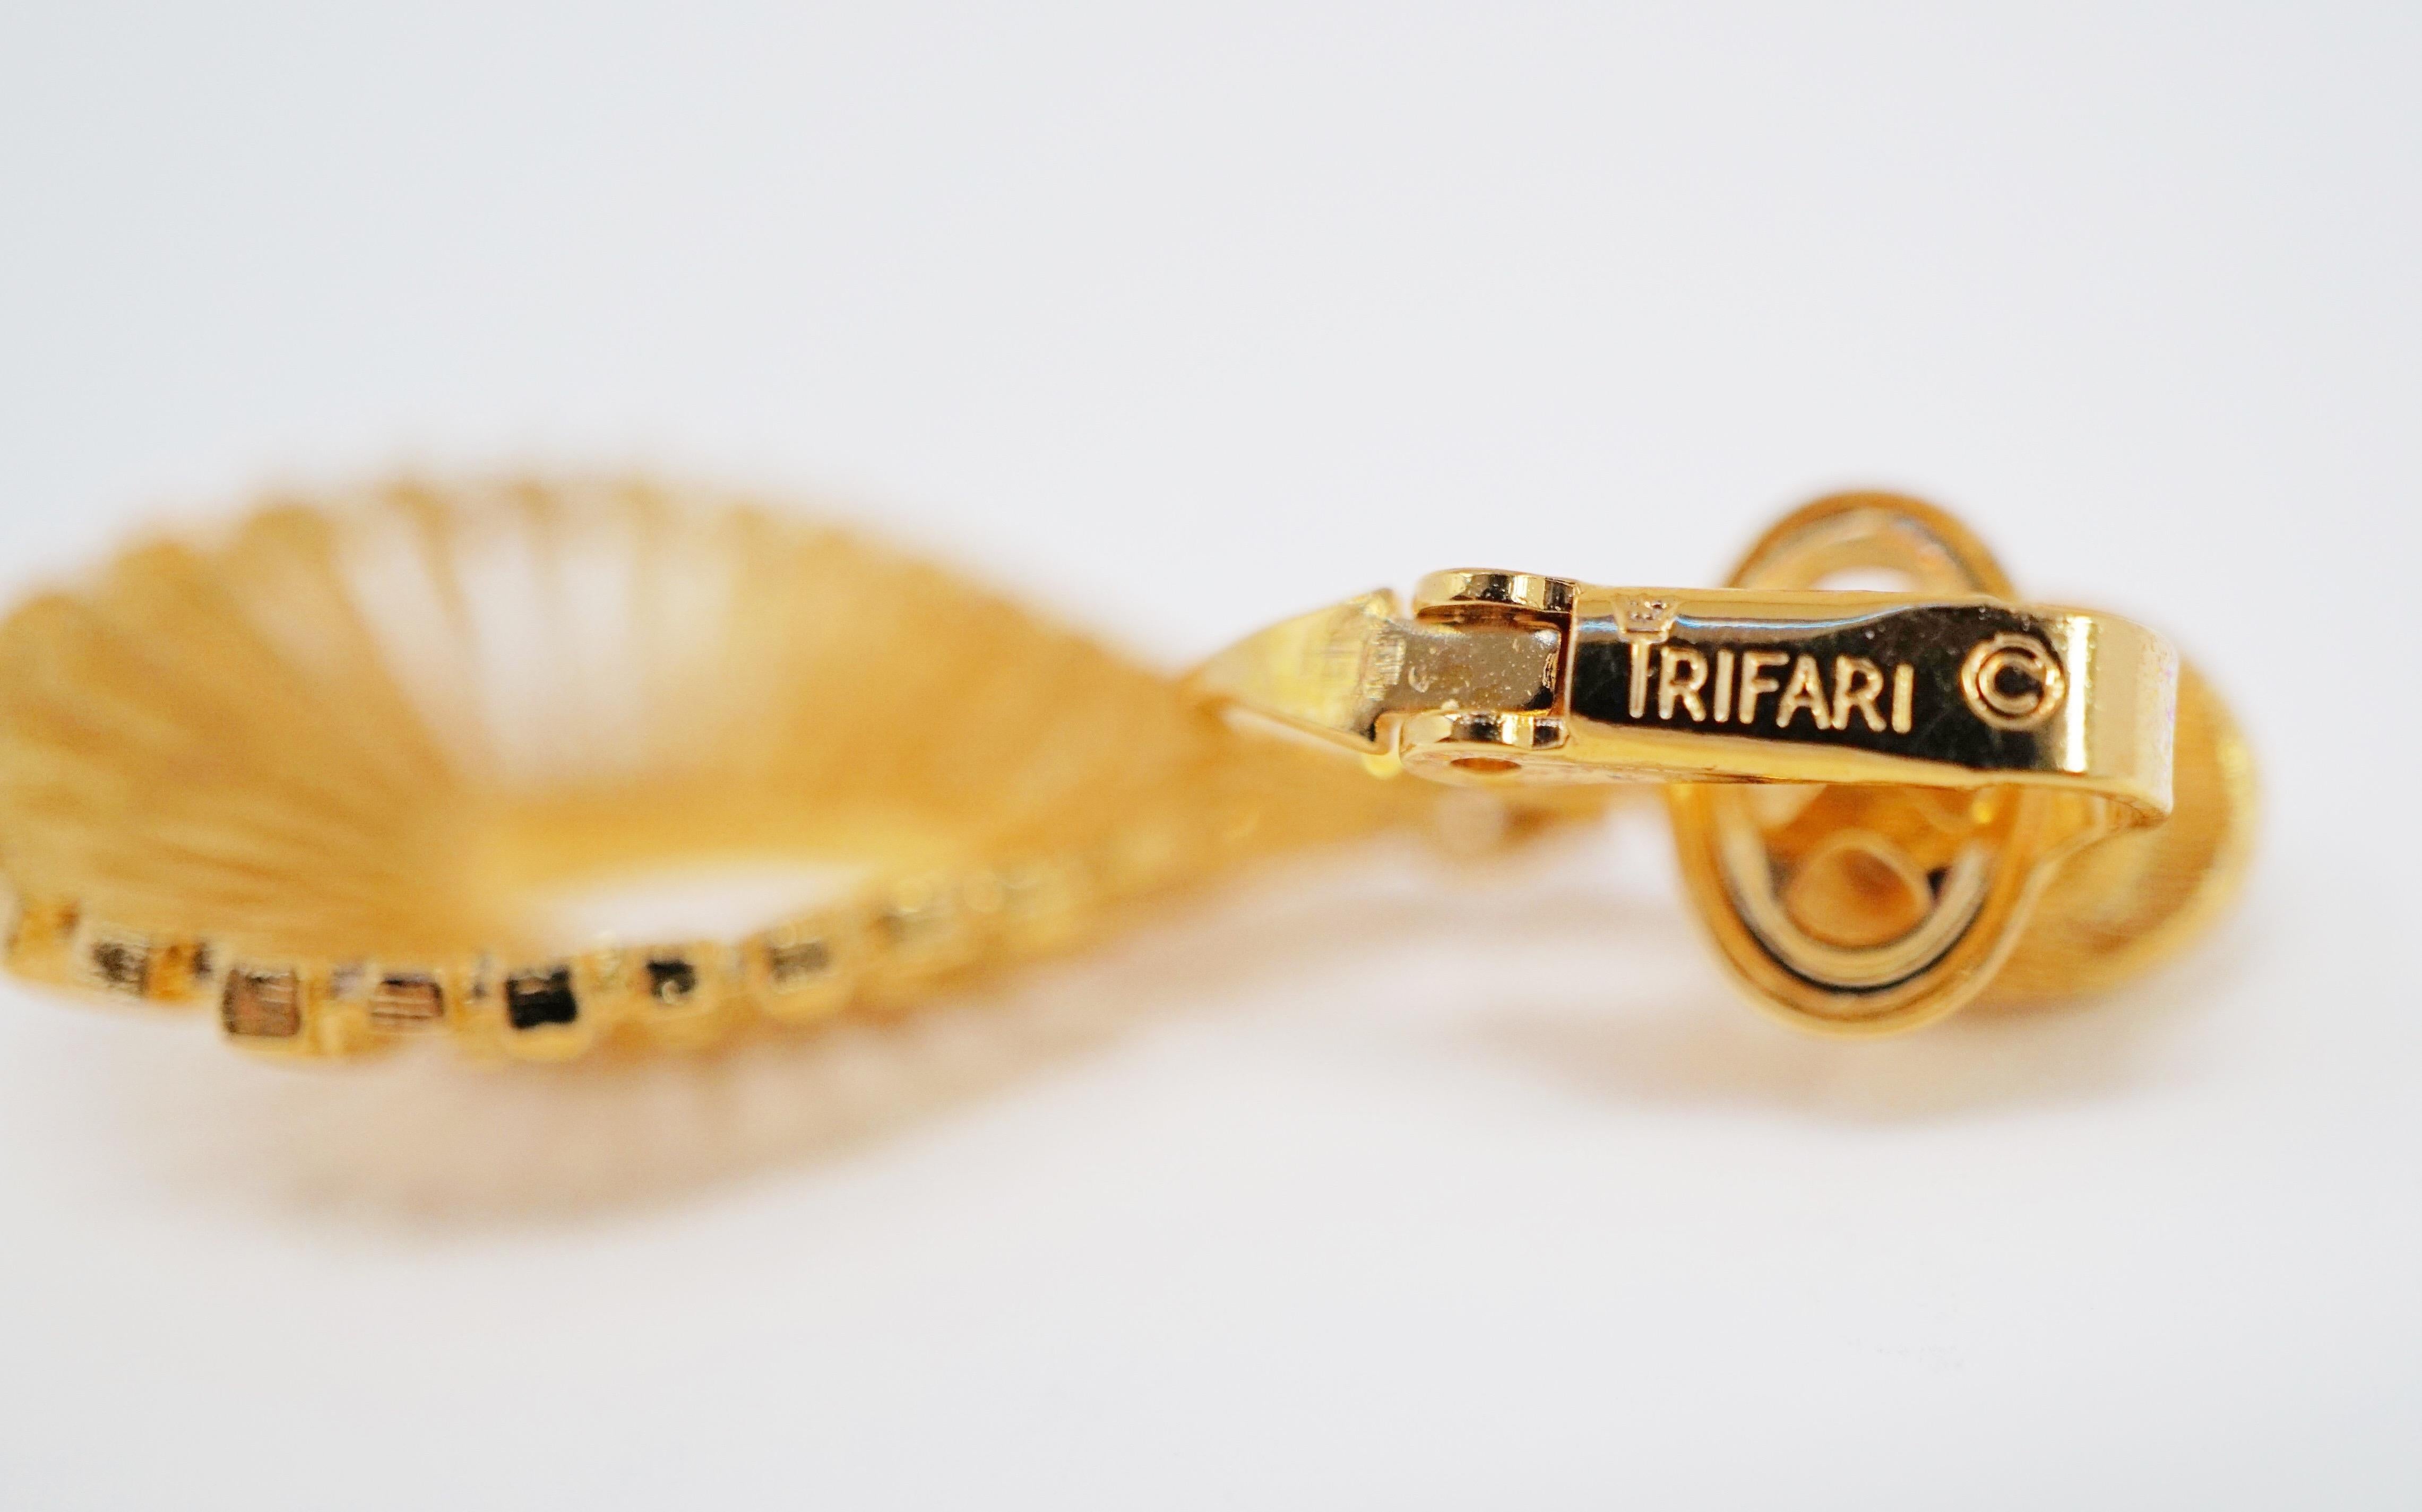 trifari earrings clip on